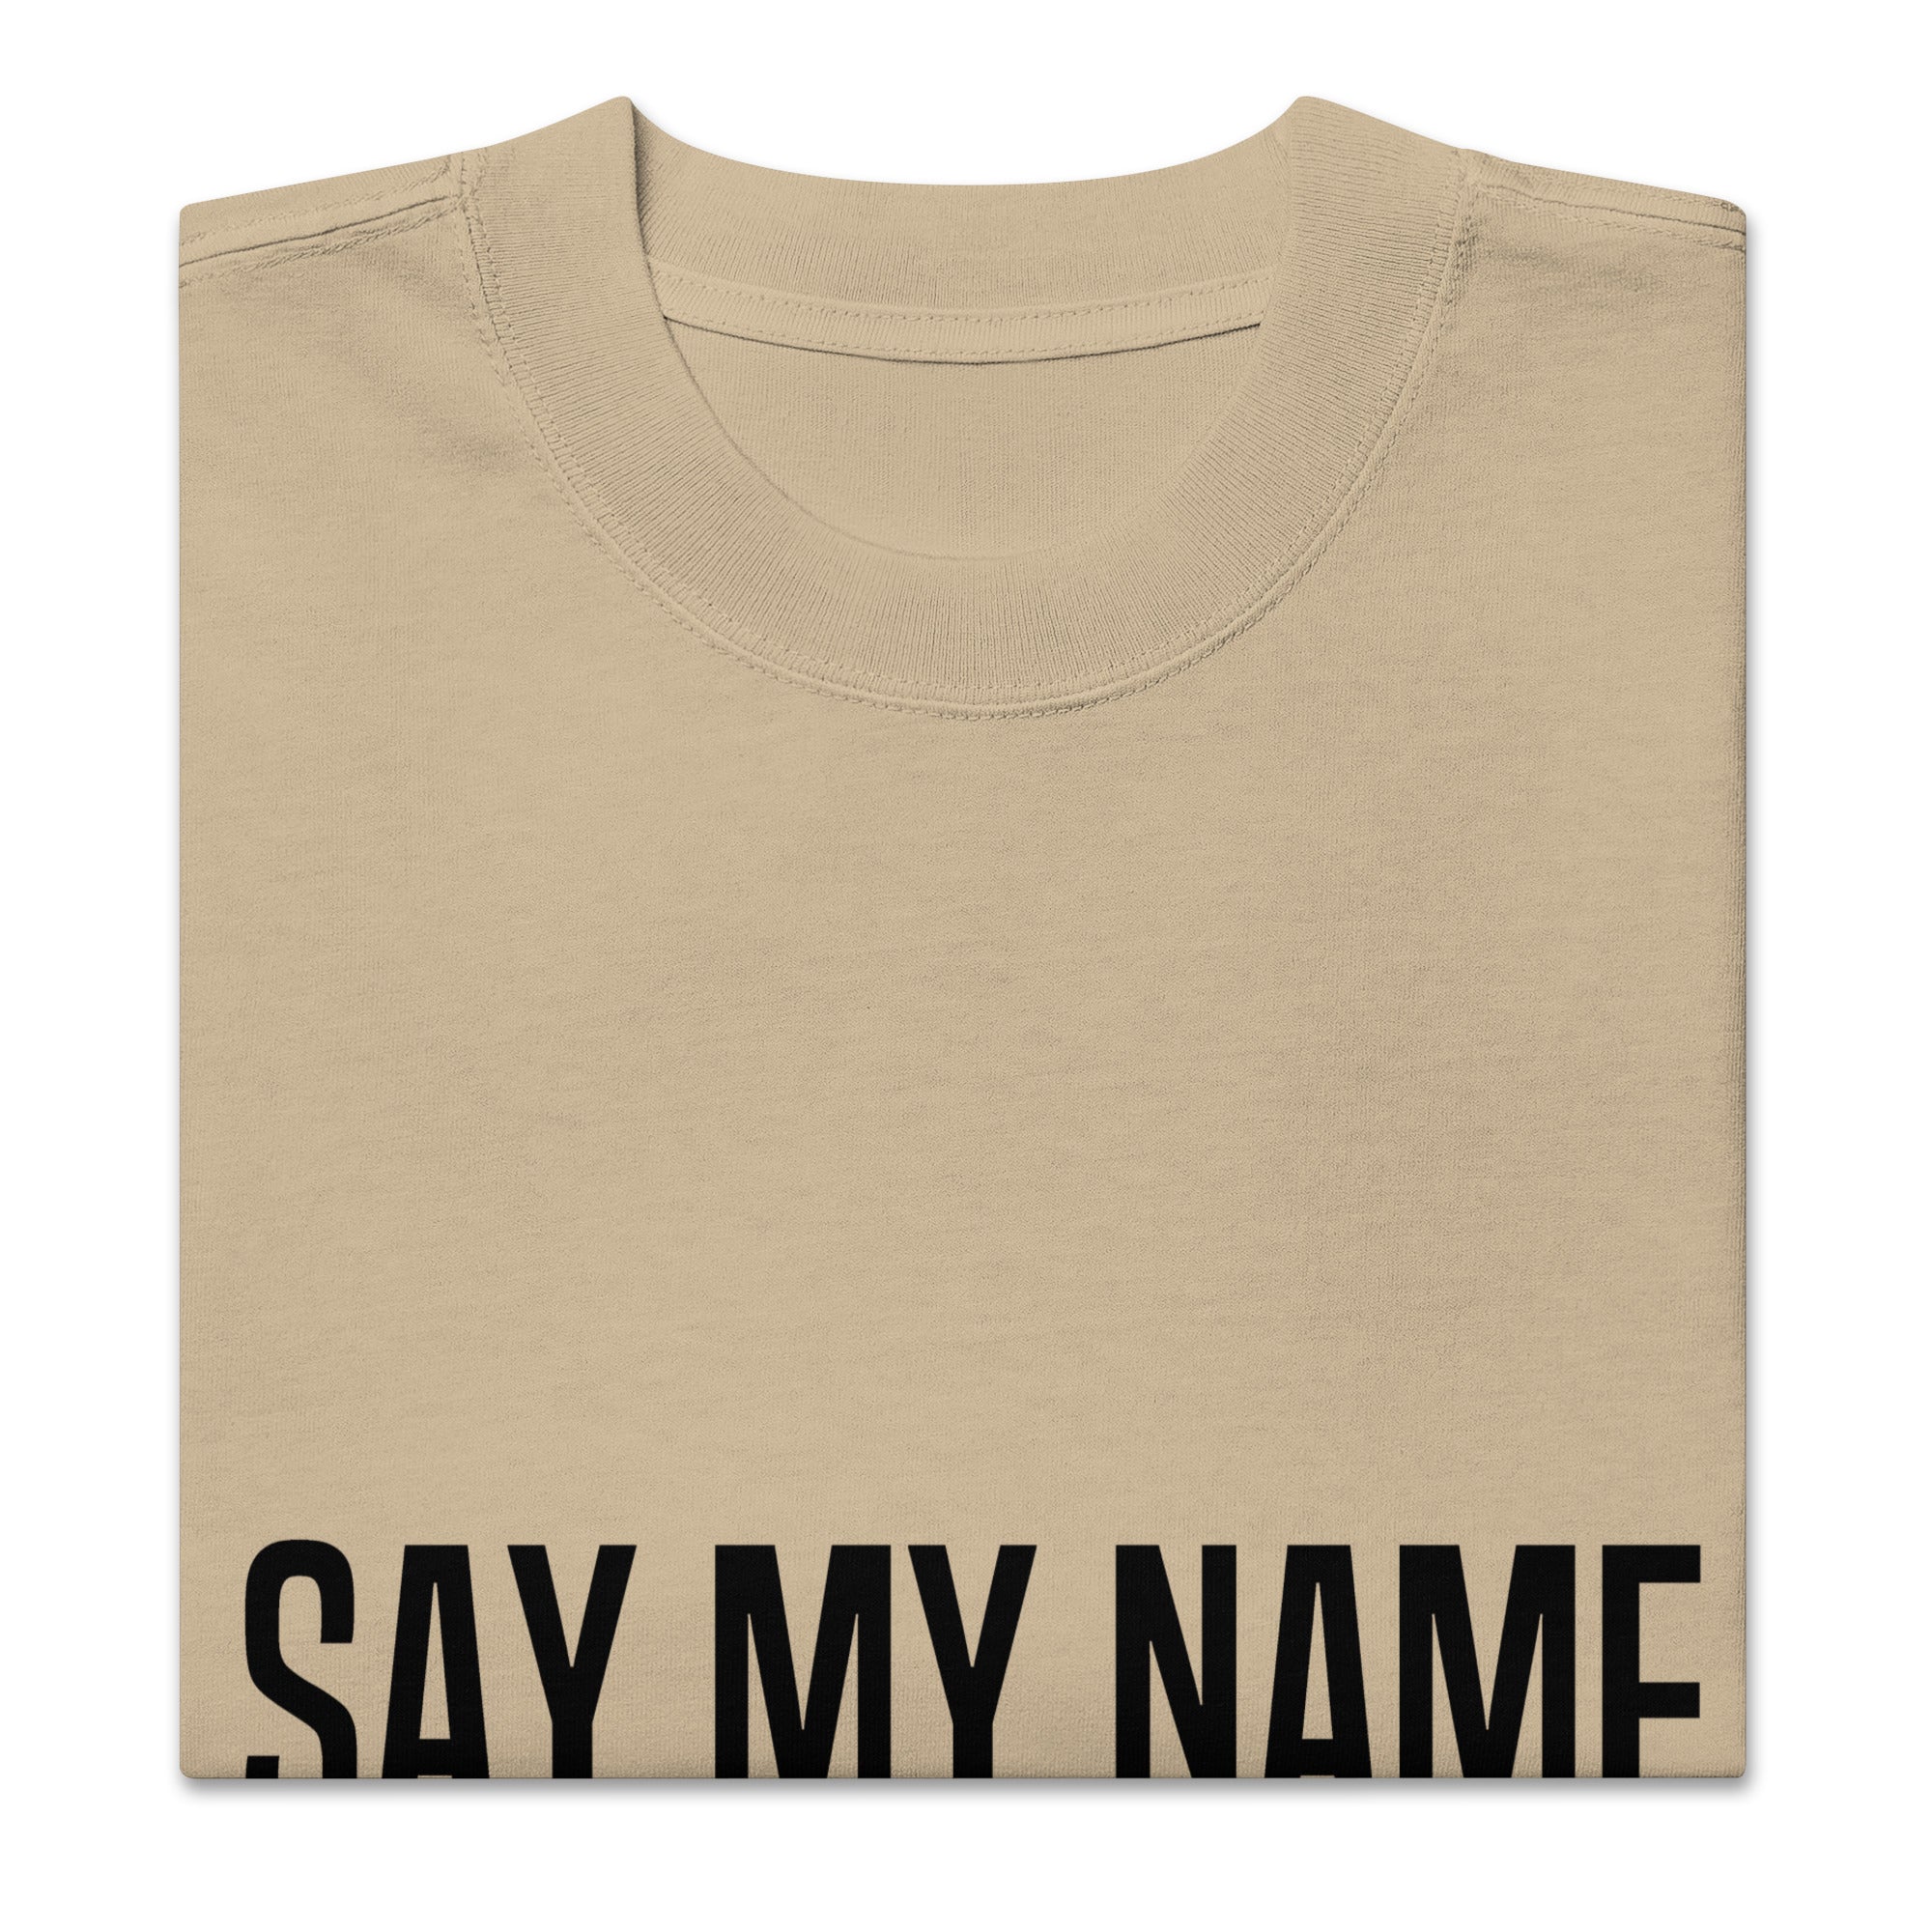 CSG oversized unisex vervaagd "SAY MY NAME" t-shirt